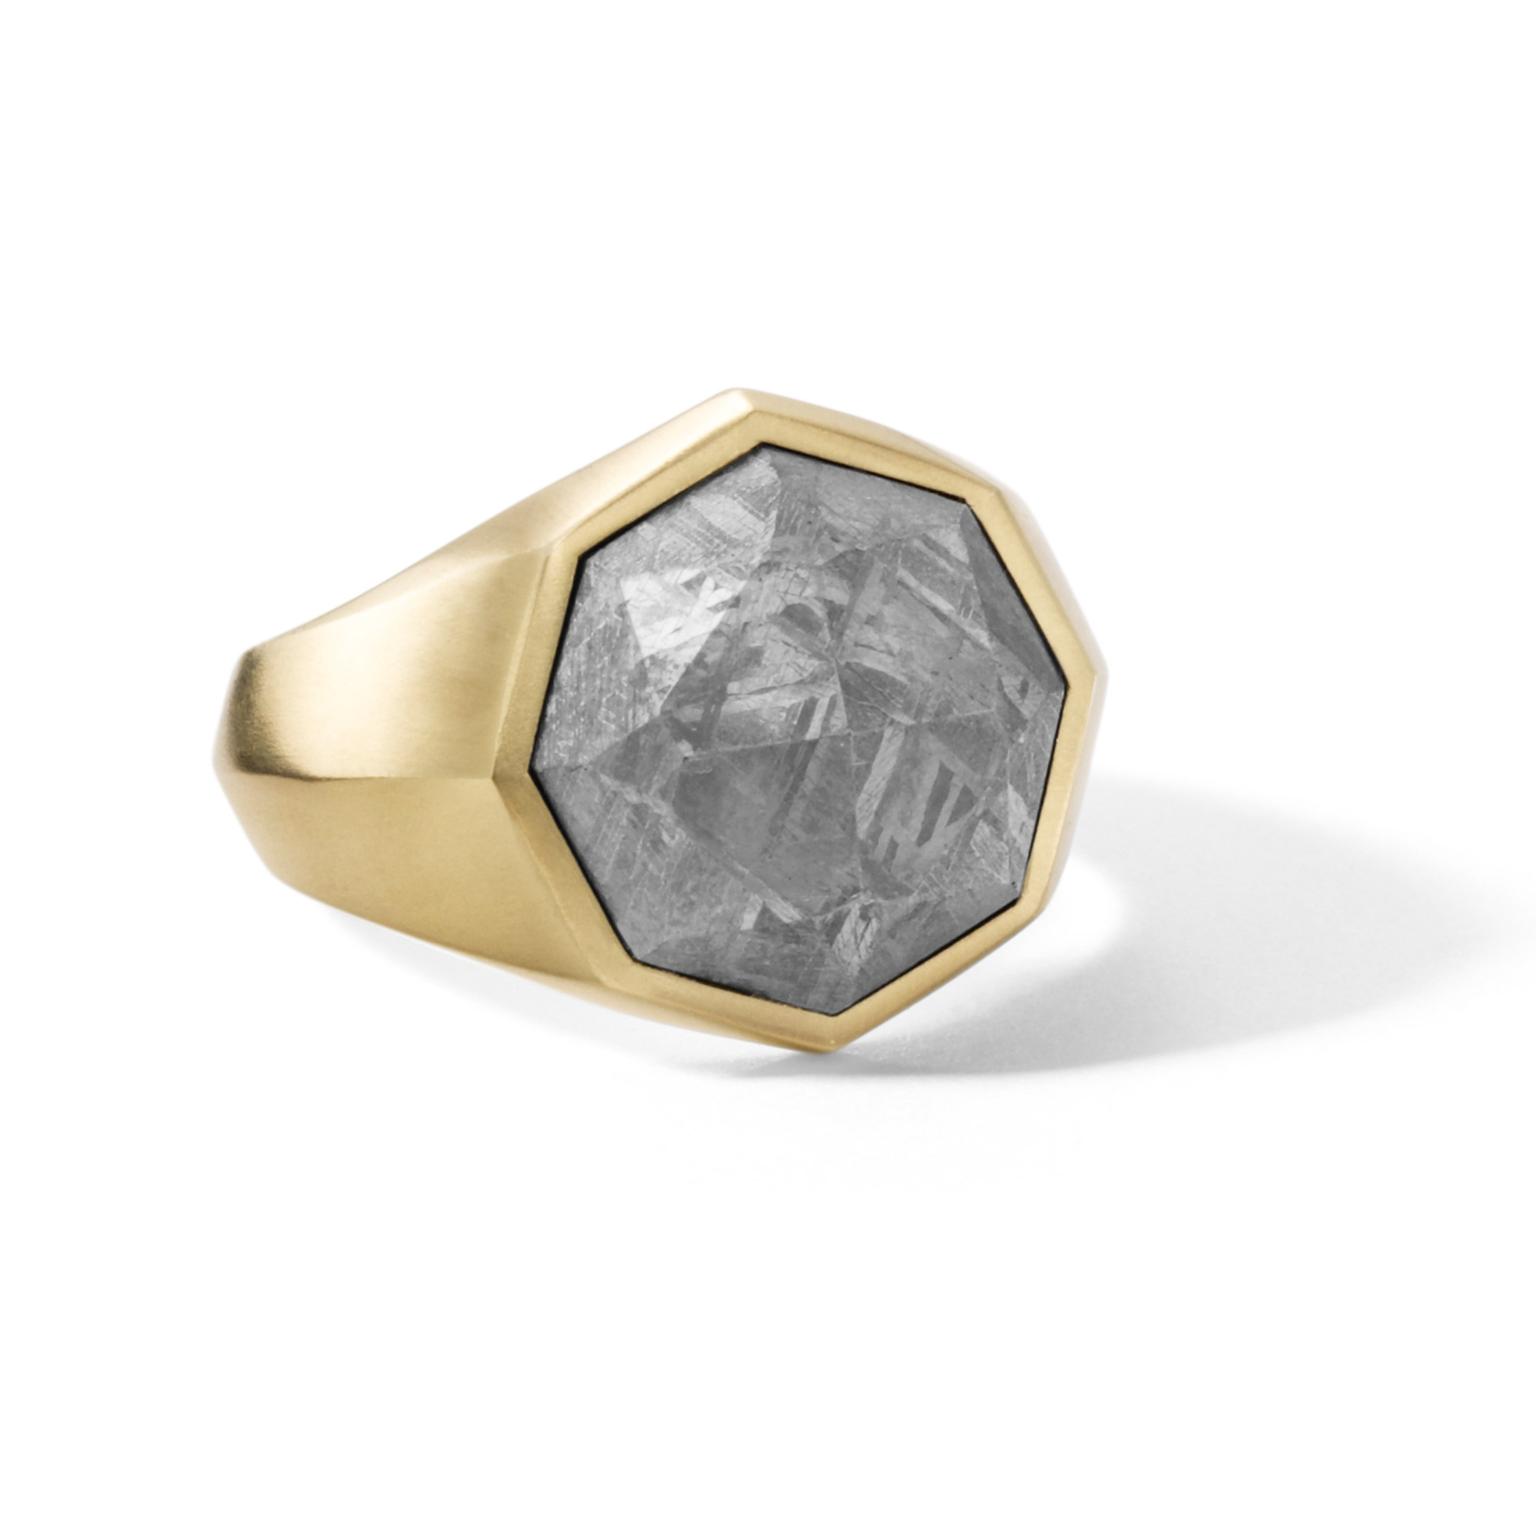 David-Yurman-Meteorite-ring-zoom